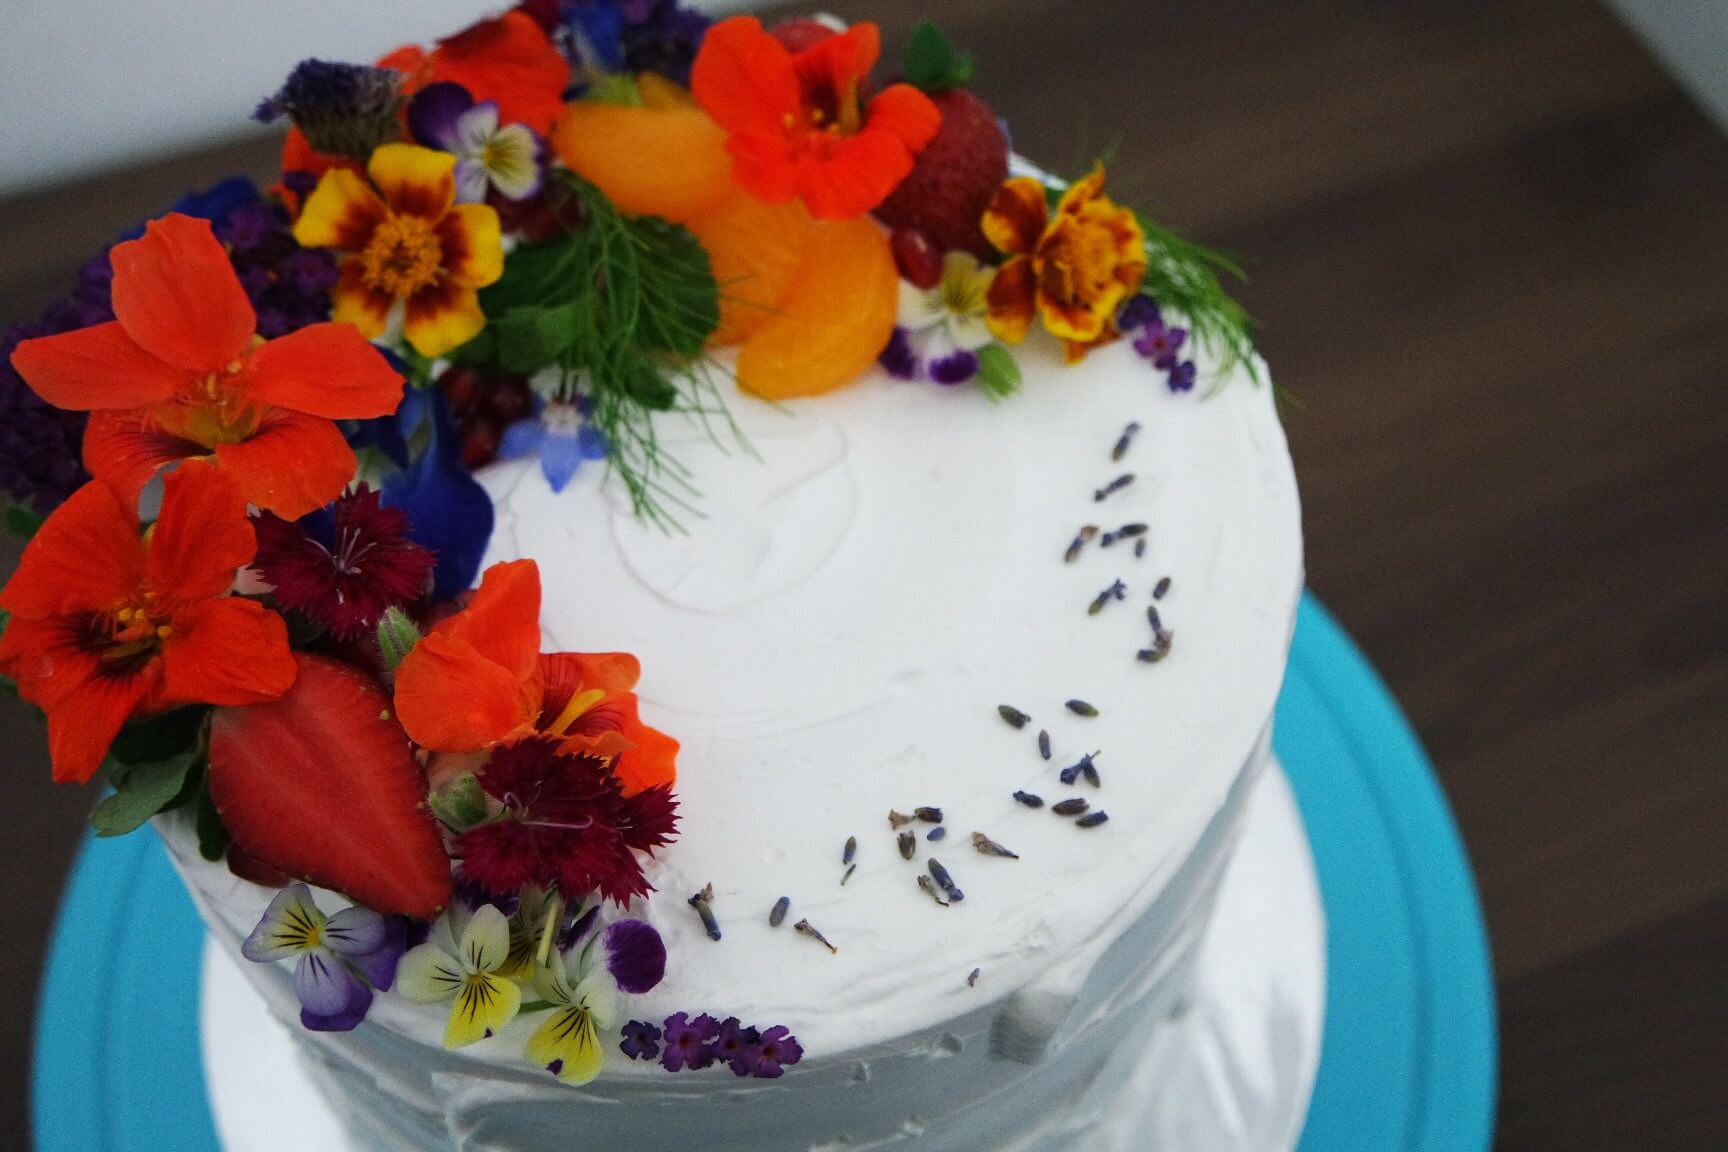 Kue tart dengan hiasan bunga edible flower